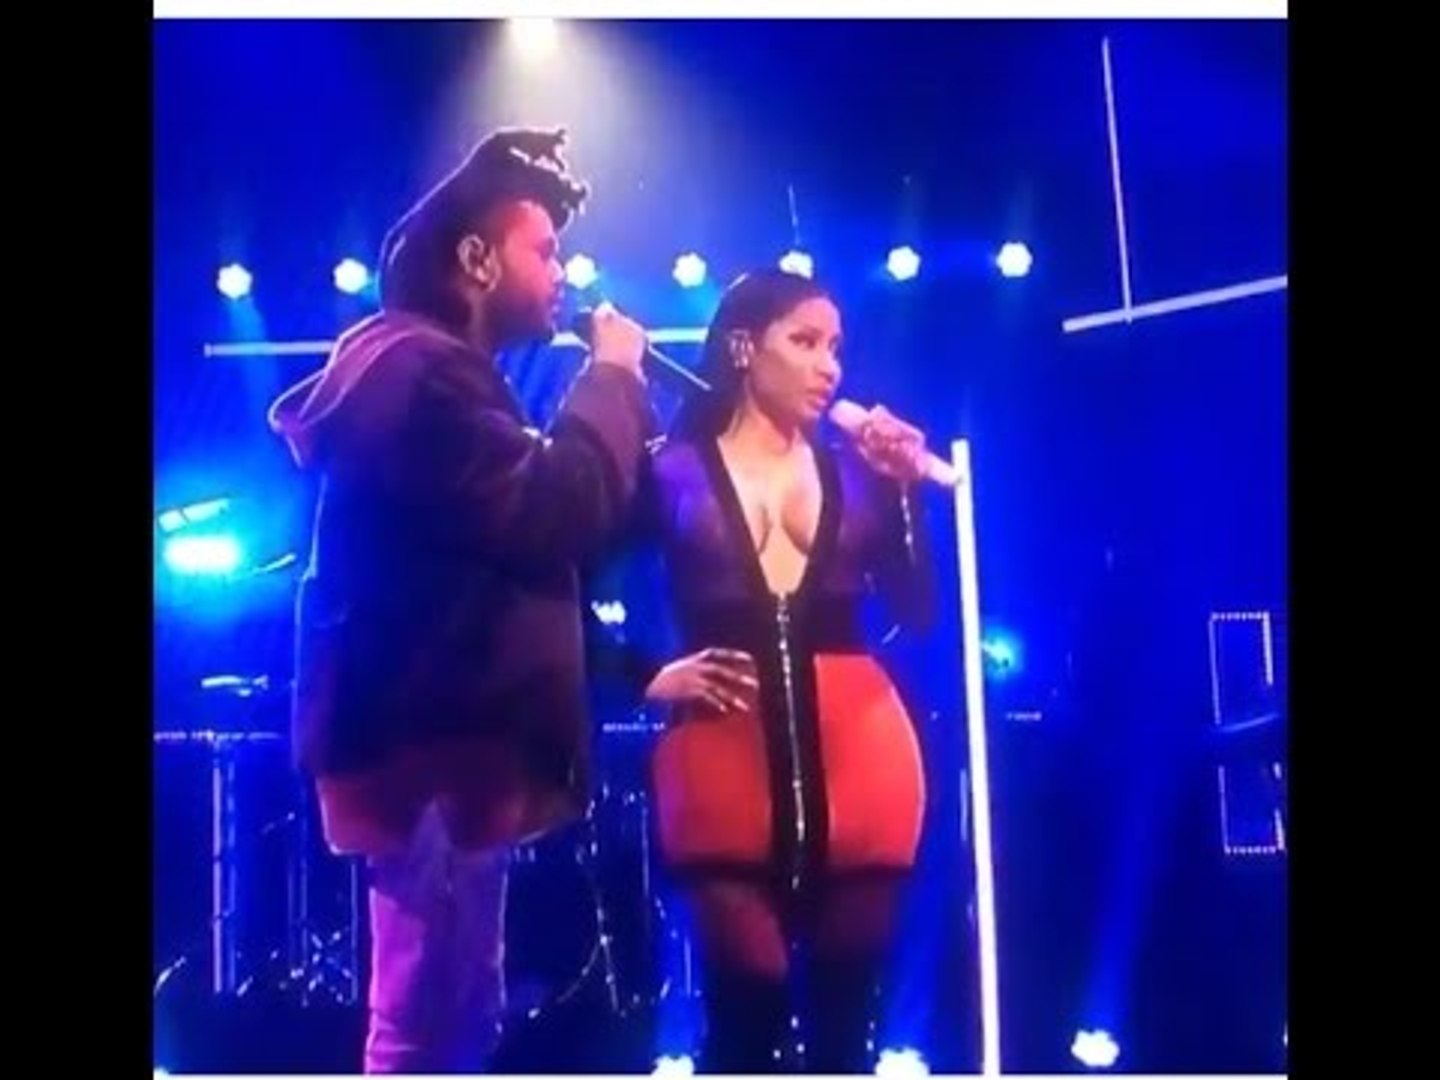 Nicki Minaj and The Weeknd